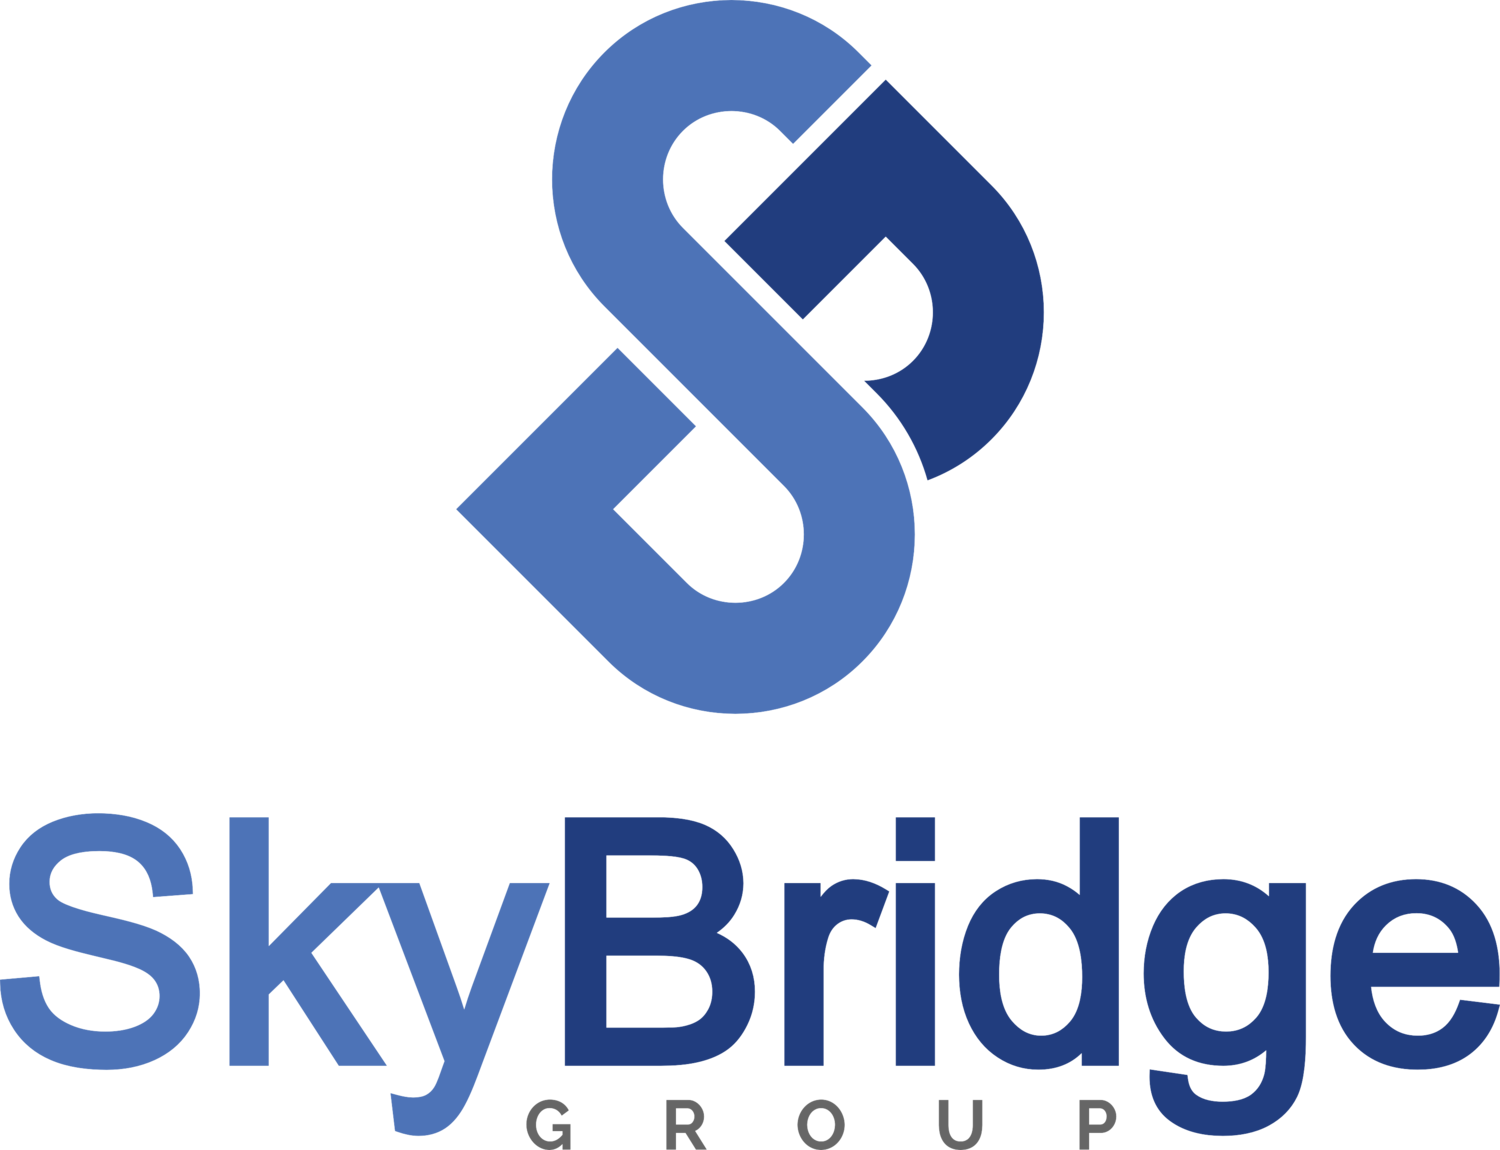 Skybridge Group